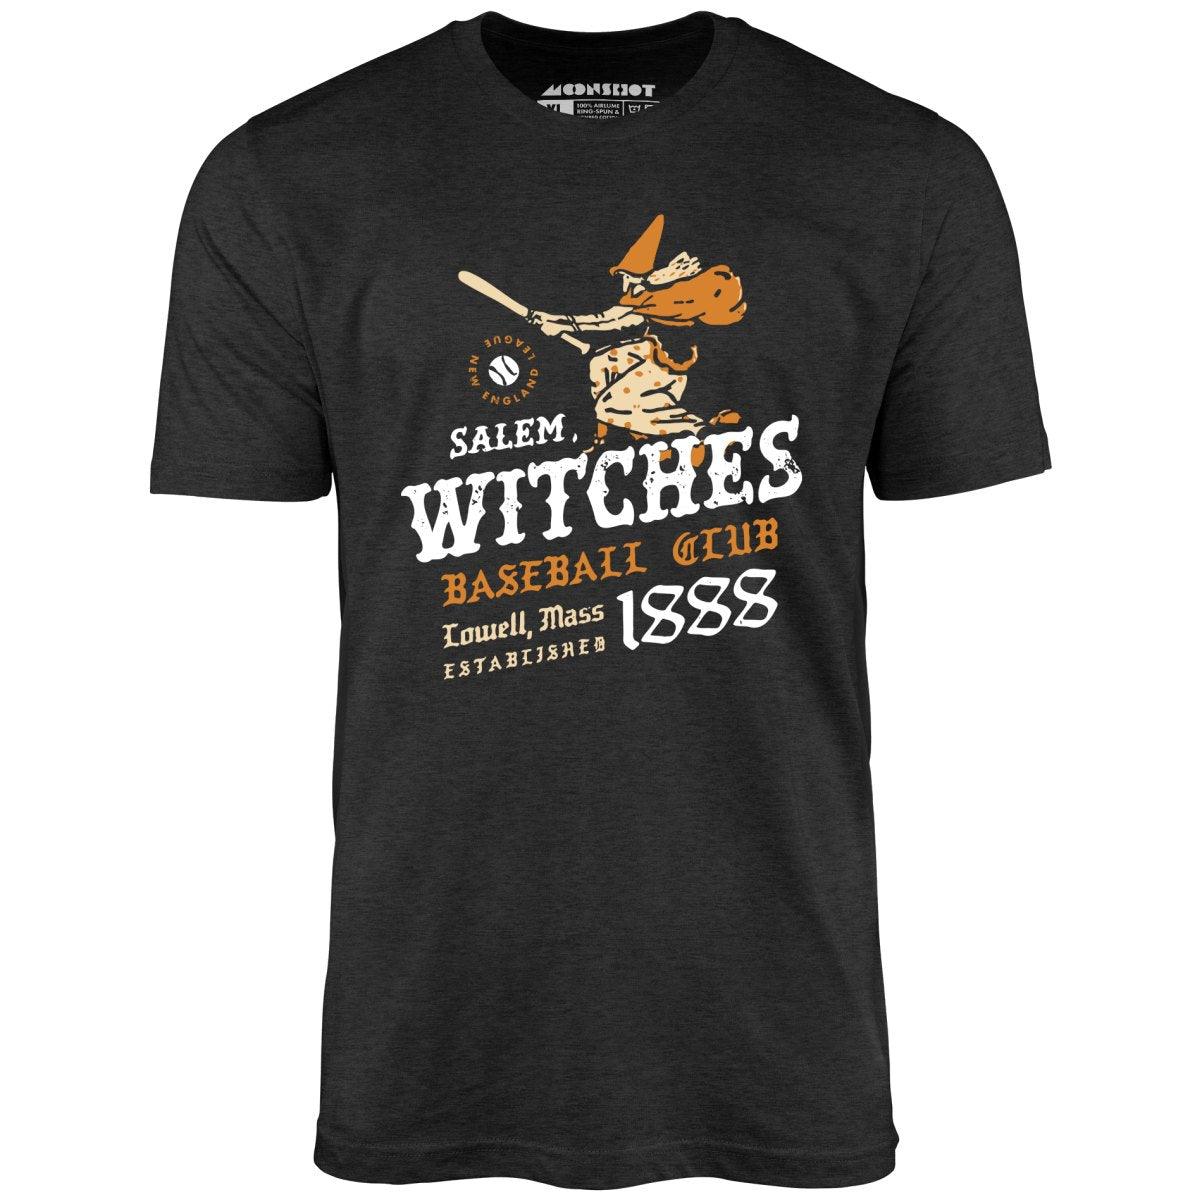 Salem Witches - Massachusetts - Vintage Defunct Baseball Teams - Unisex T-Shirt